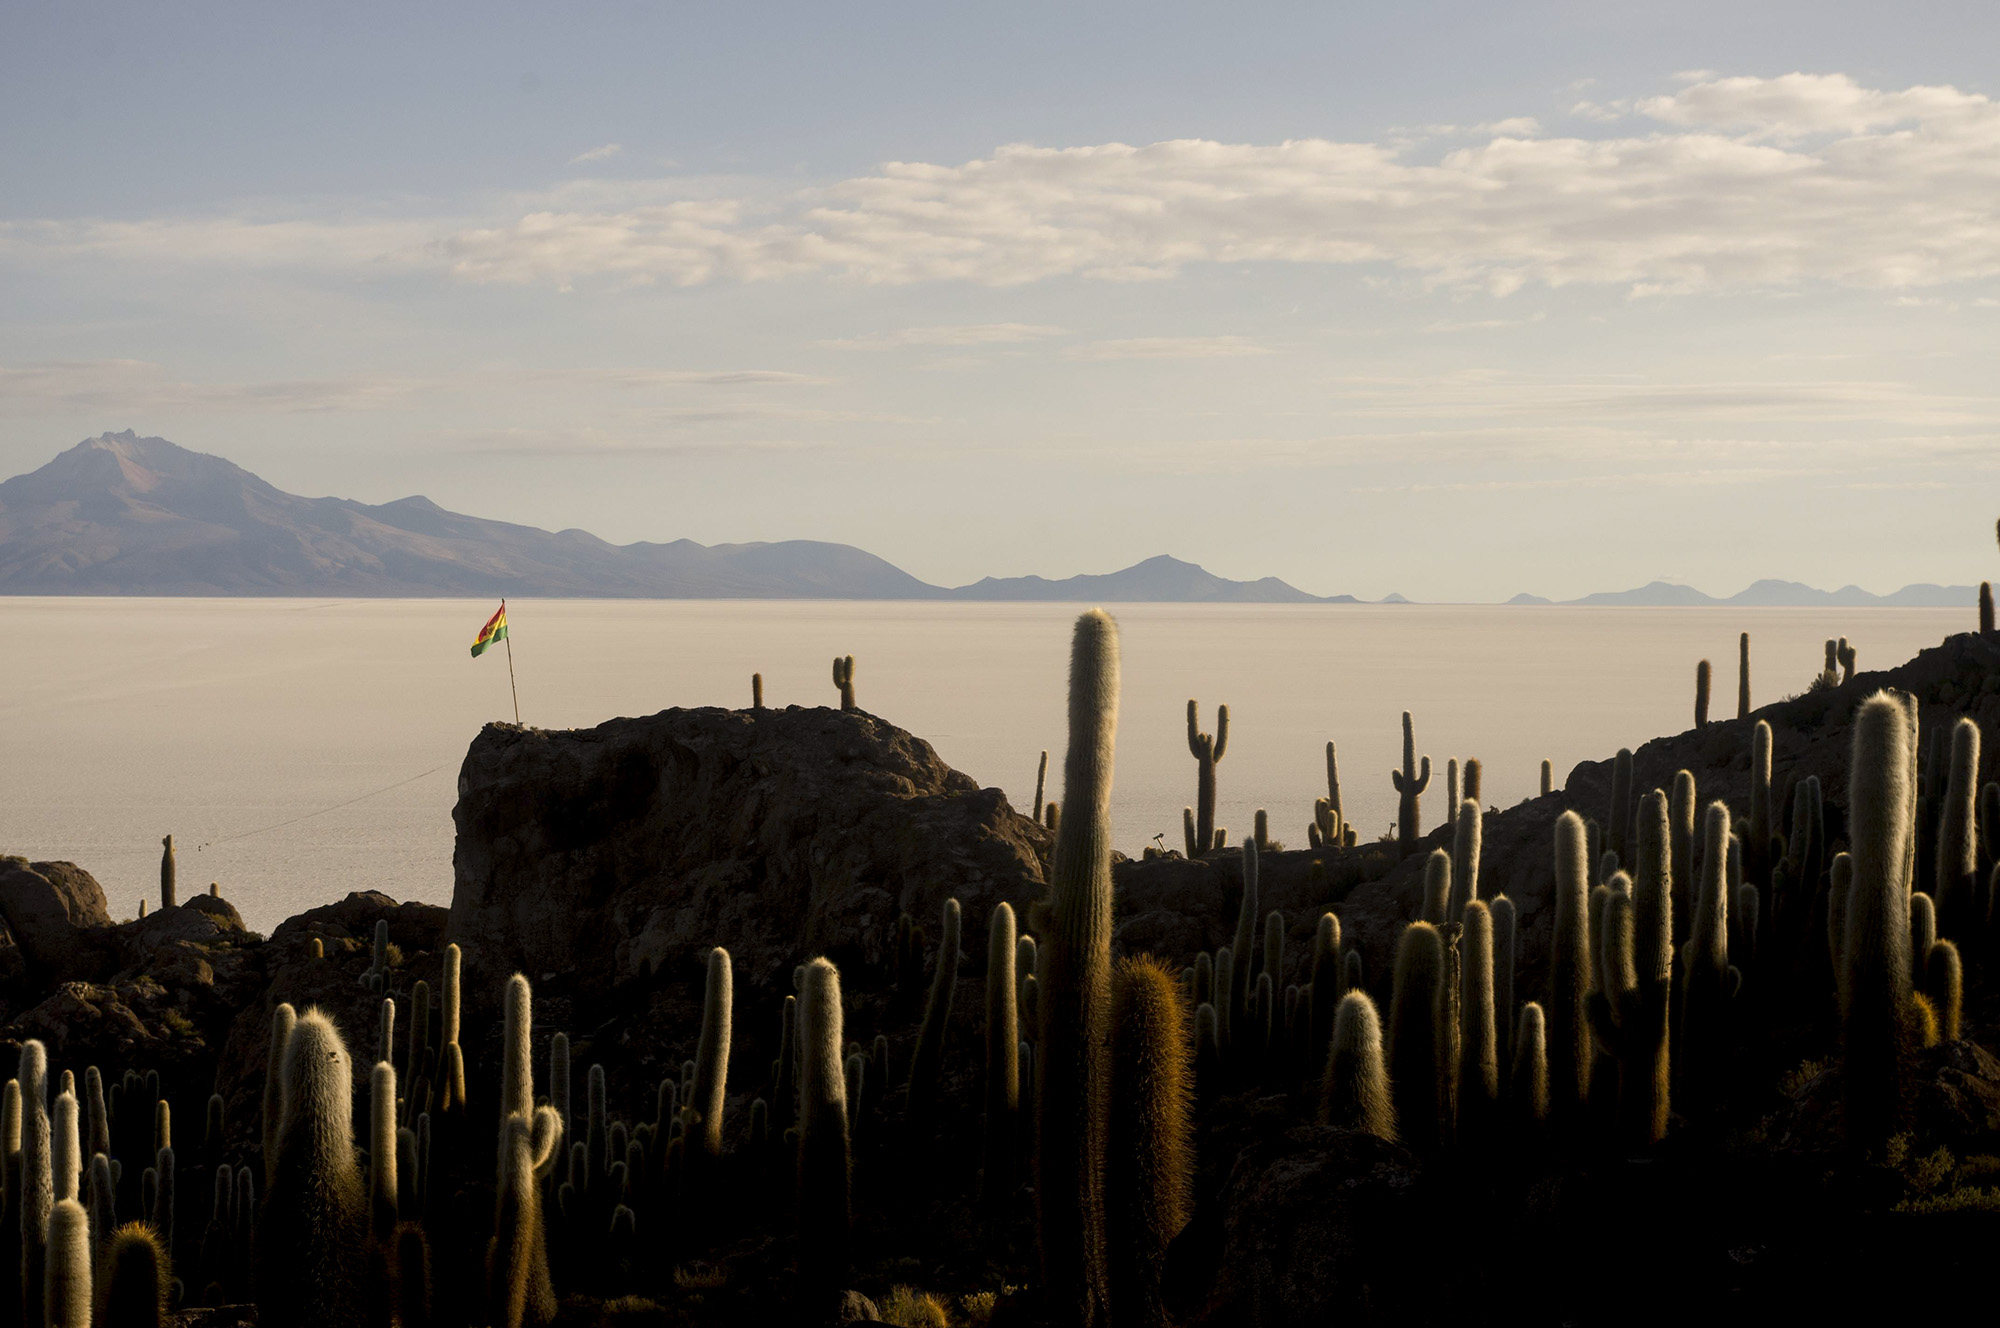 Bolivian Landscapes 1